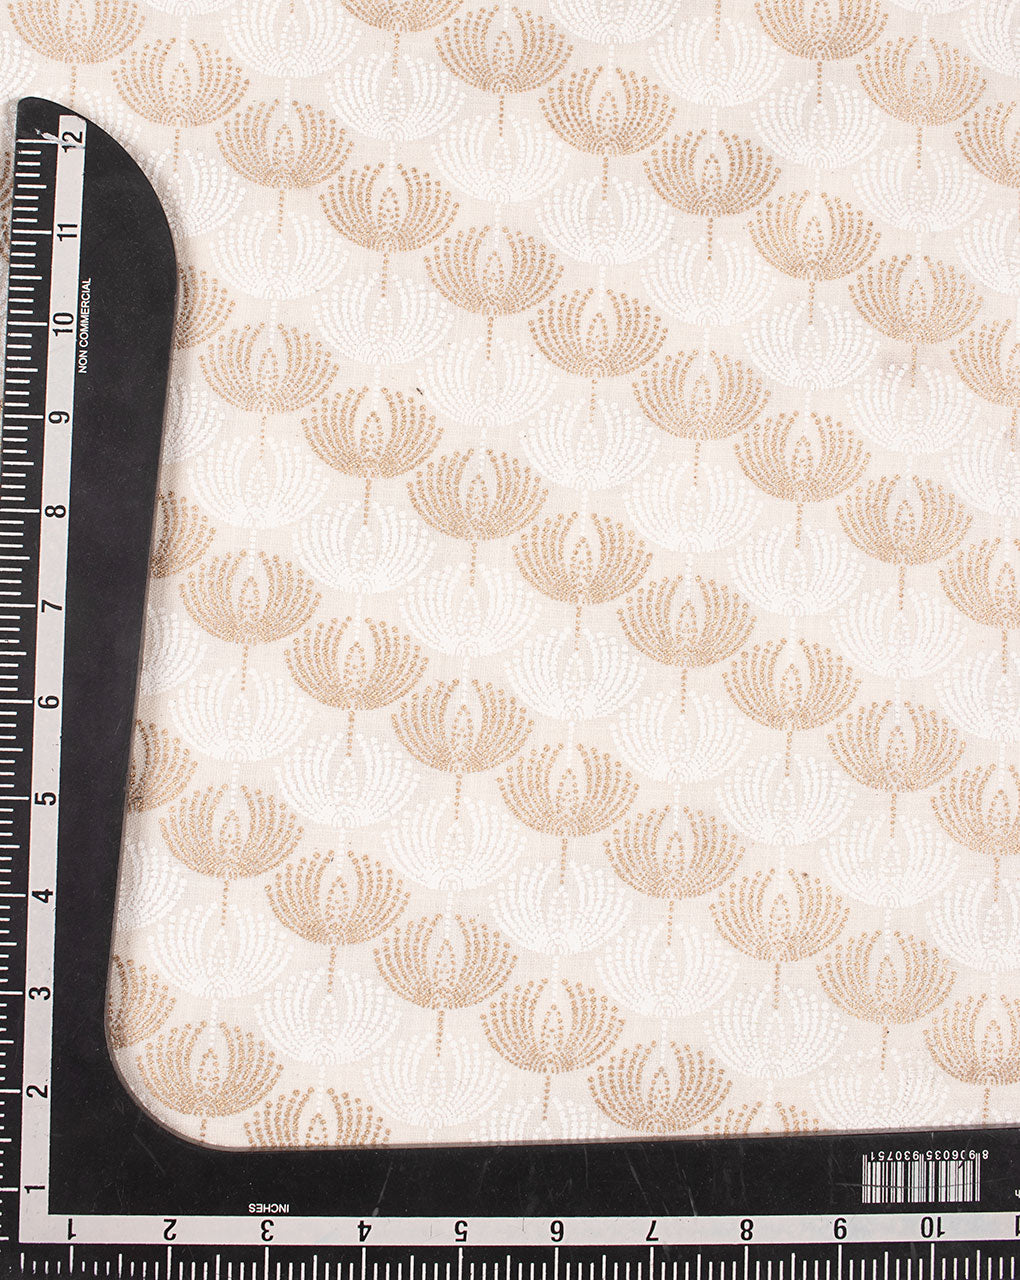 Khari Foil Screen Print Loom TextuSlub Cotton Fabric - Fabriclore.com